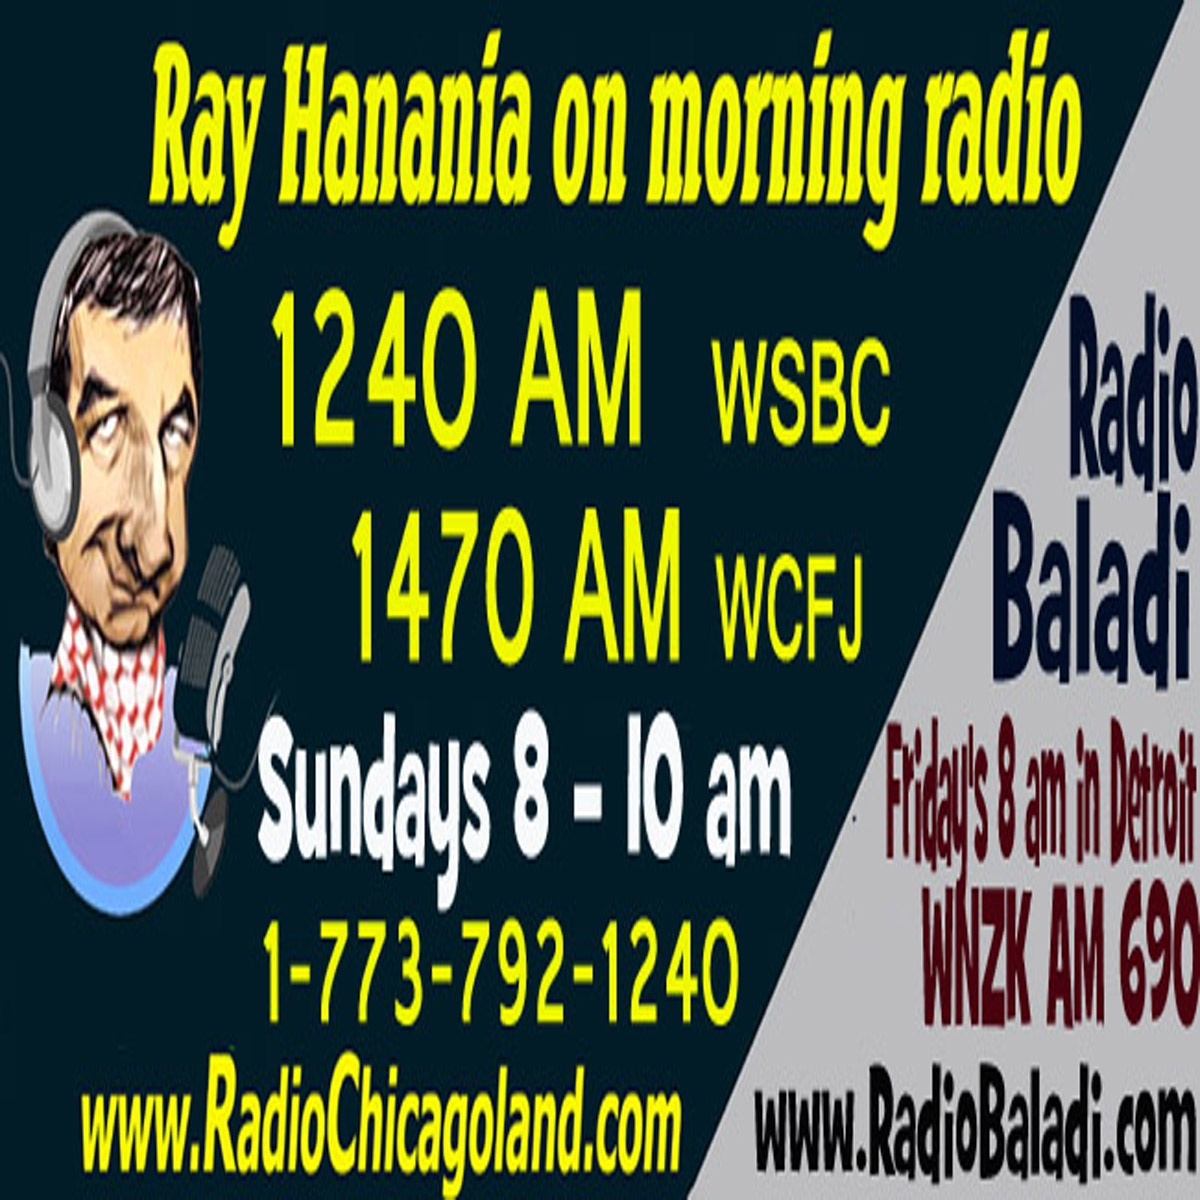 09-28-12 Radio Baladi Palestine, Israel, Muslims, bias